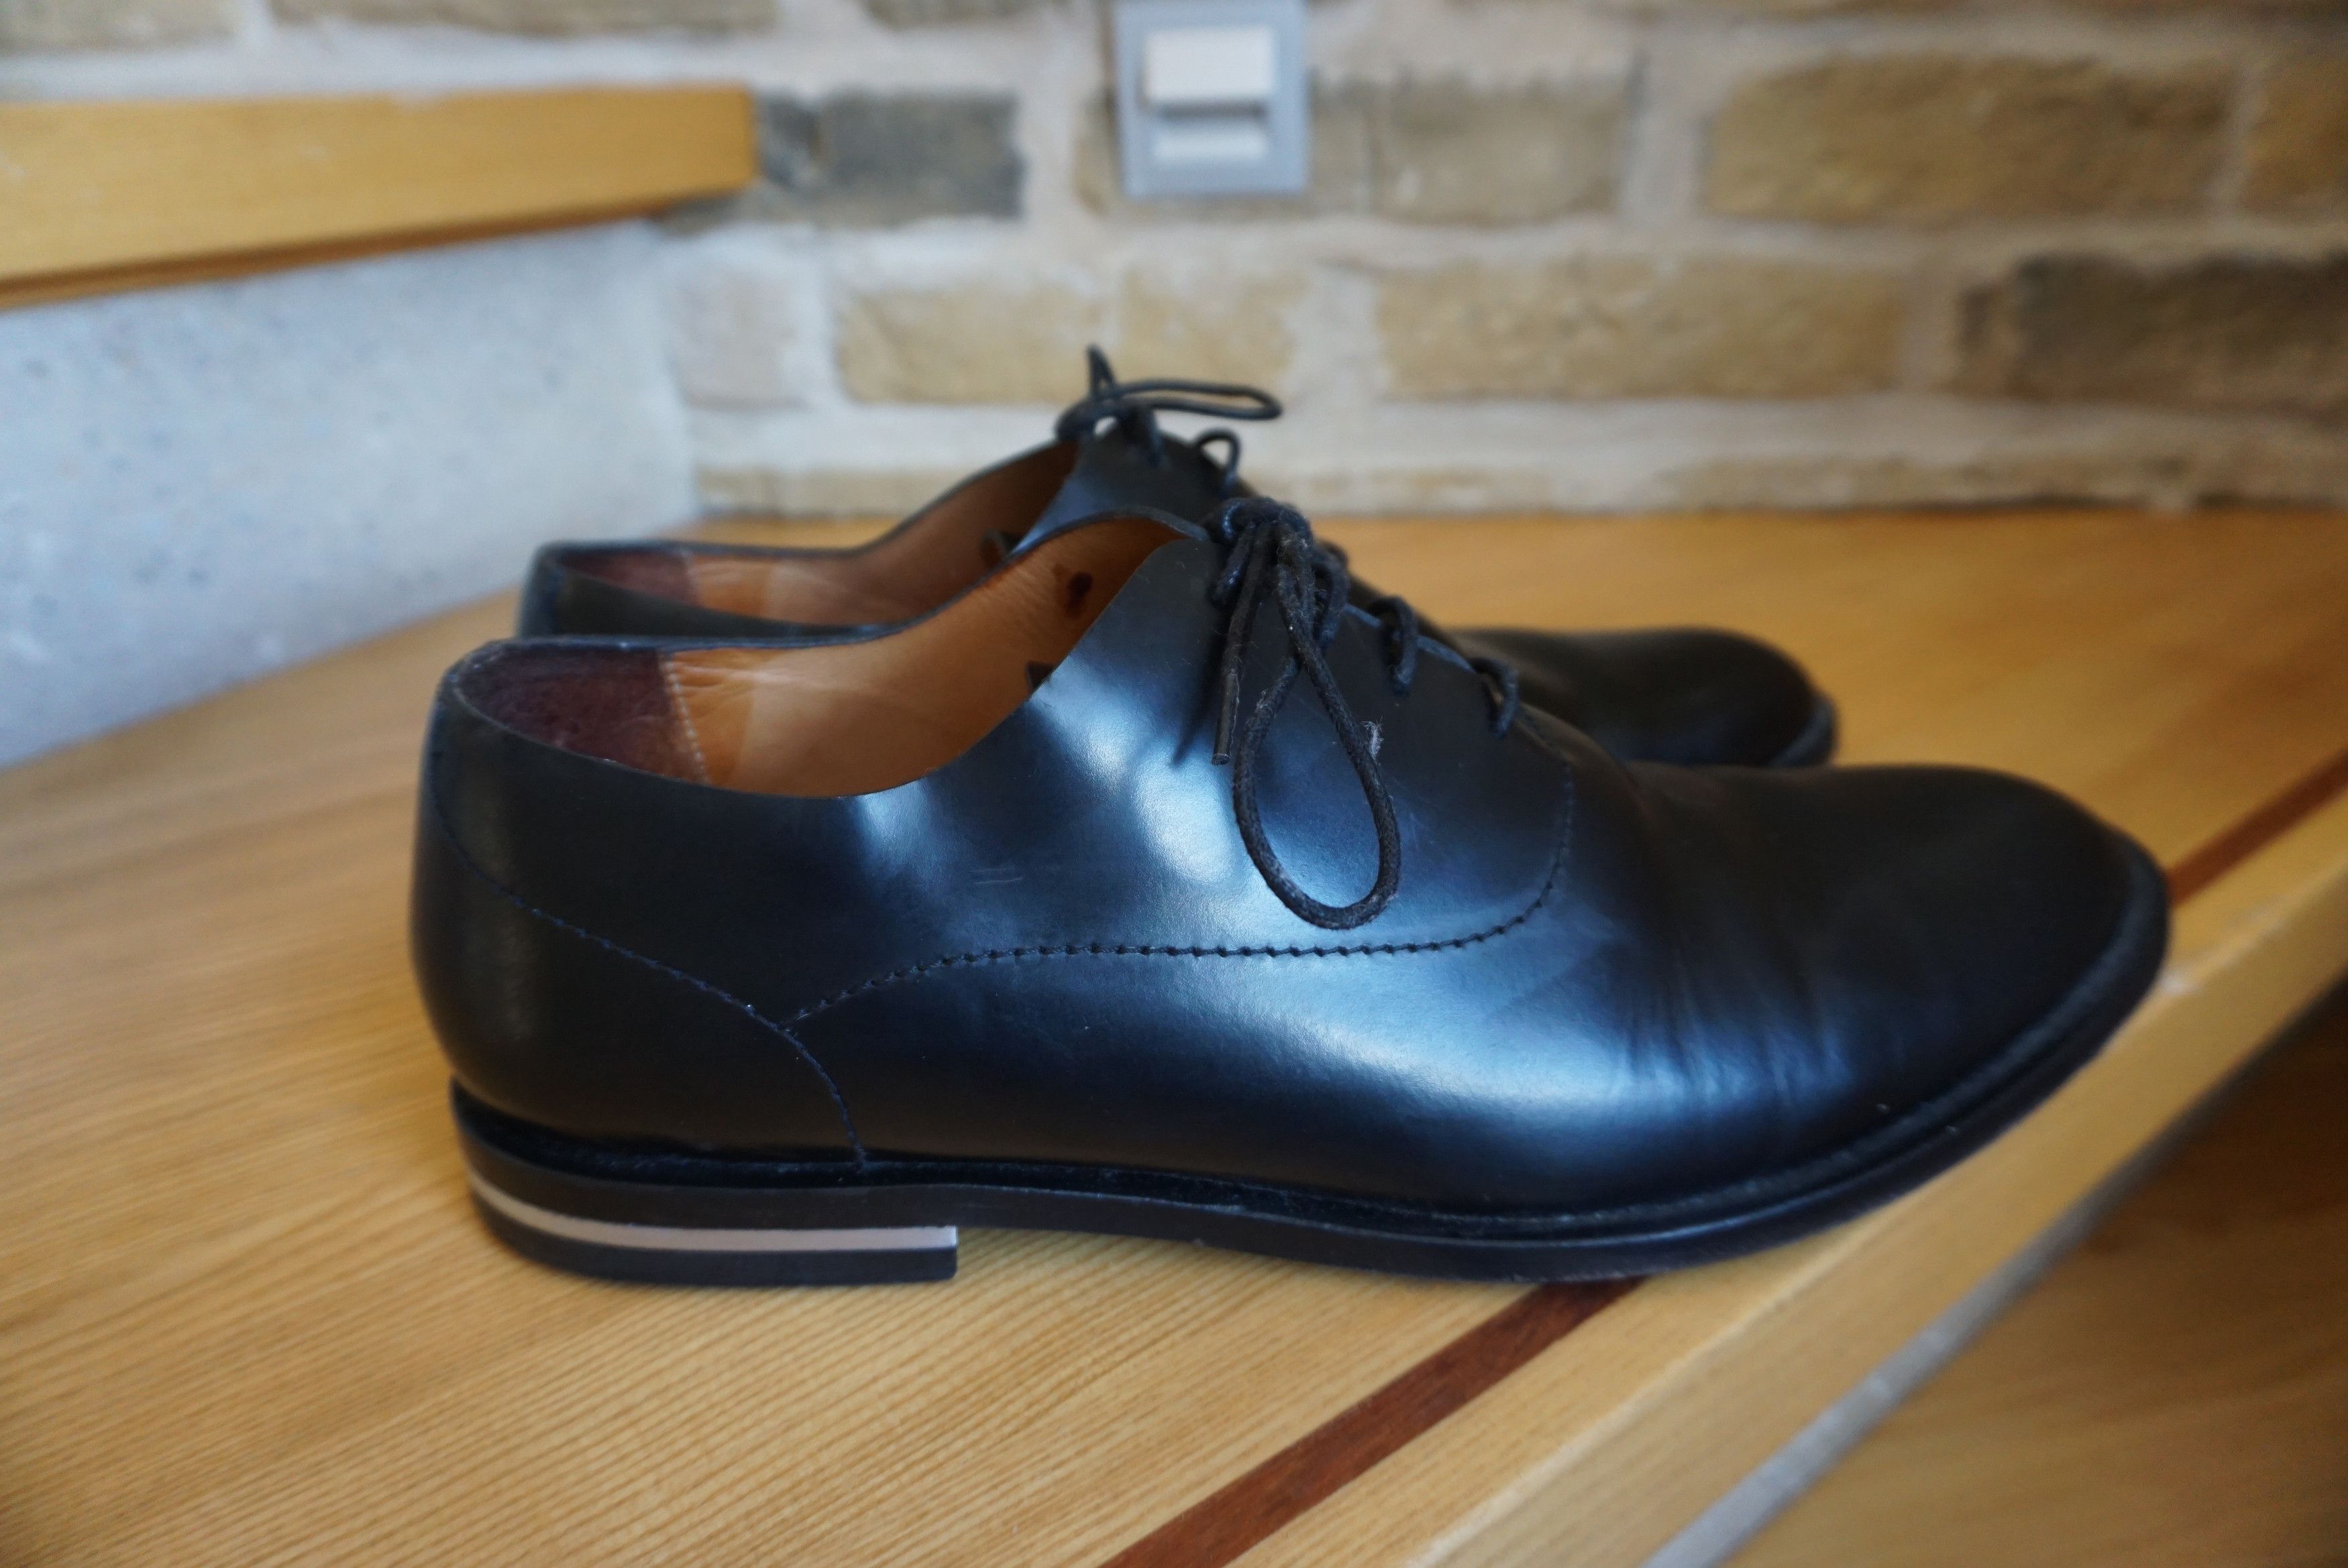 Cos COS RPR$250 leather office shoes EU44 black formal lace up Size US 10.5 / EU 43-44 - 4 Thumbnail